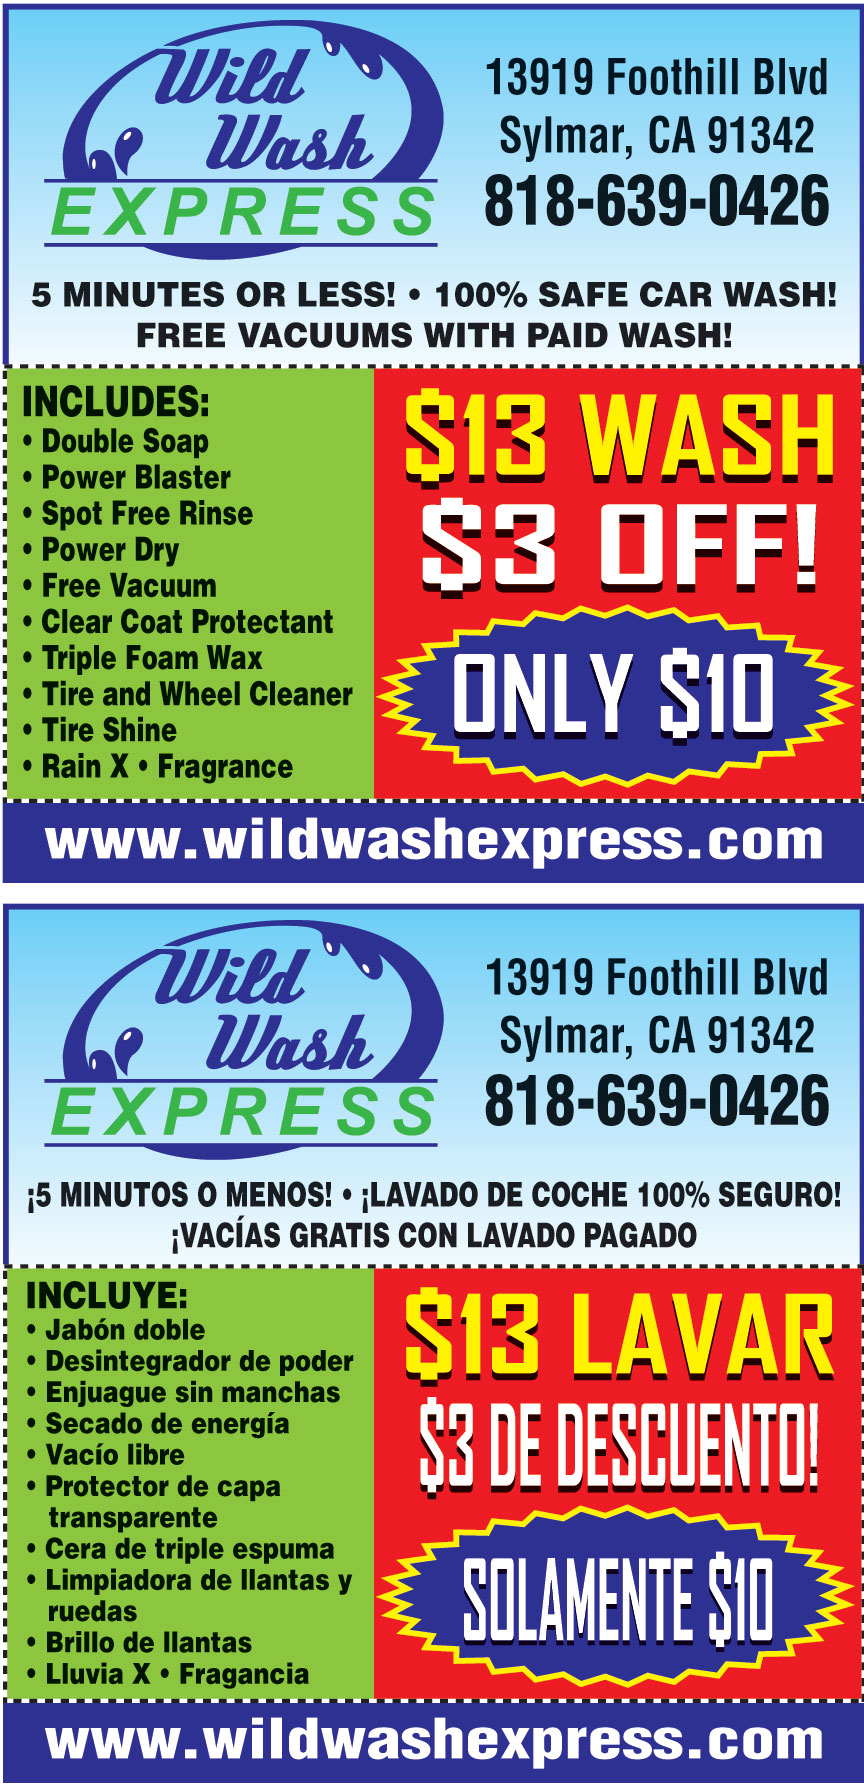 WILD WASH EXPRESS II